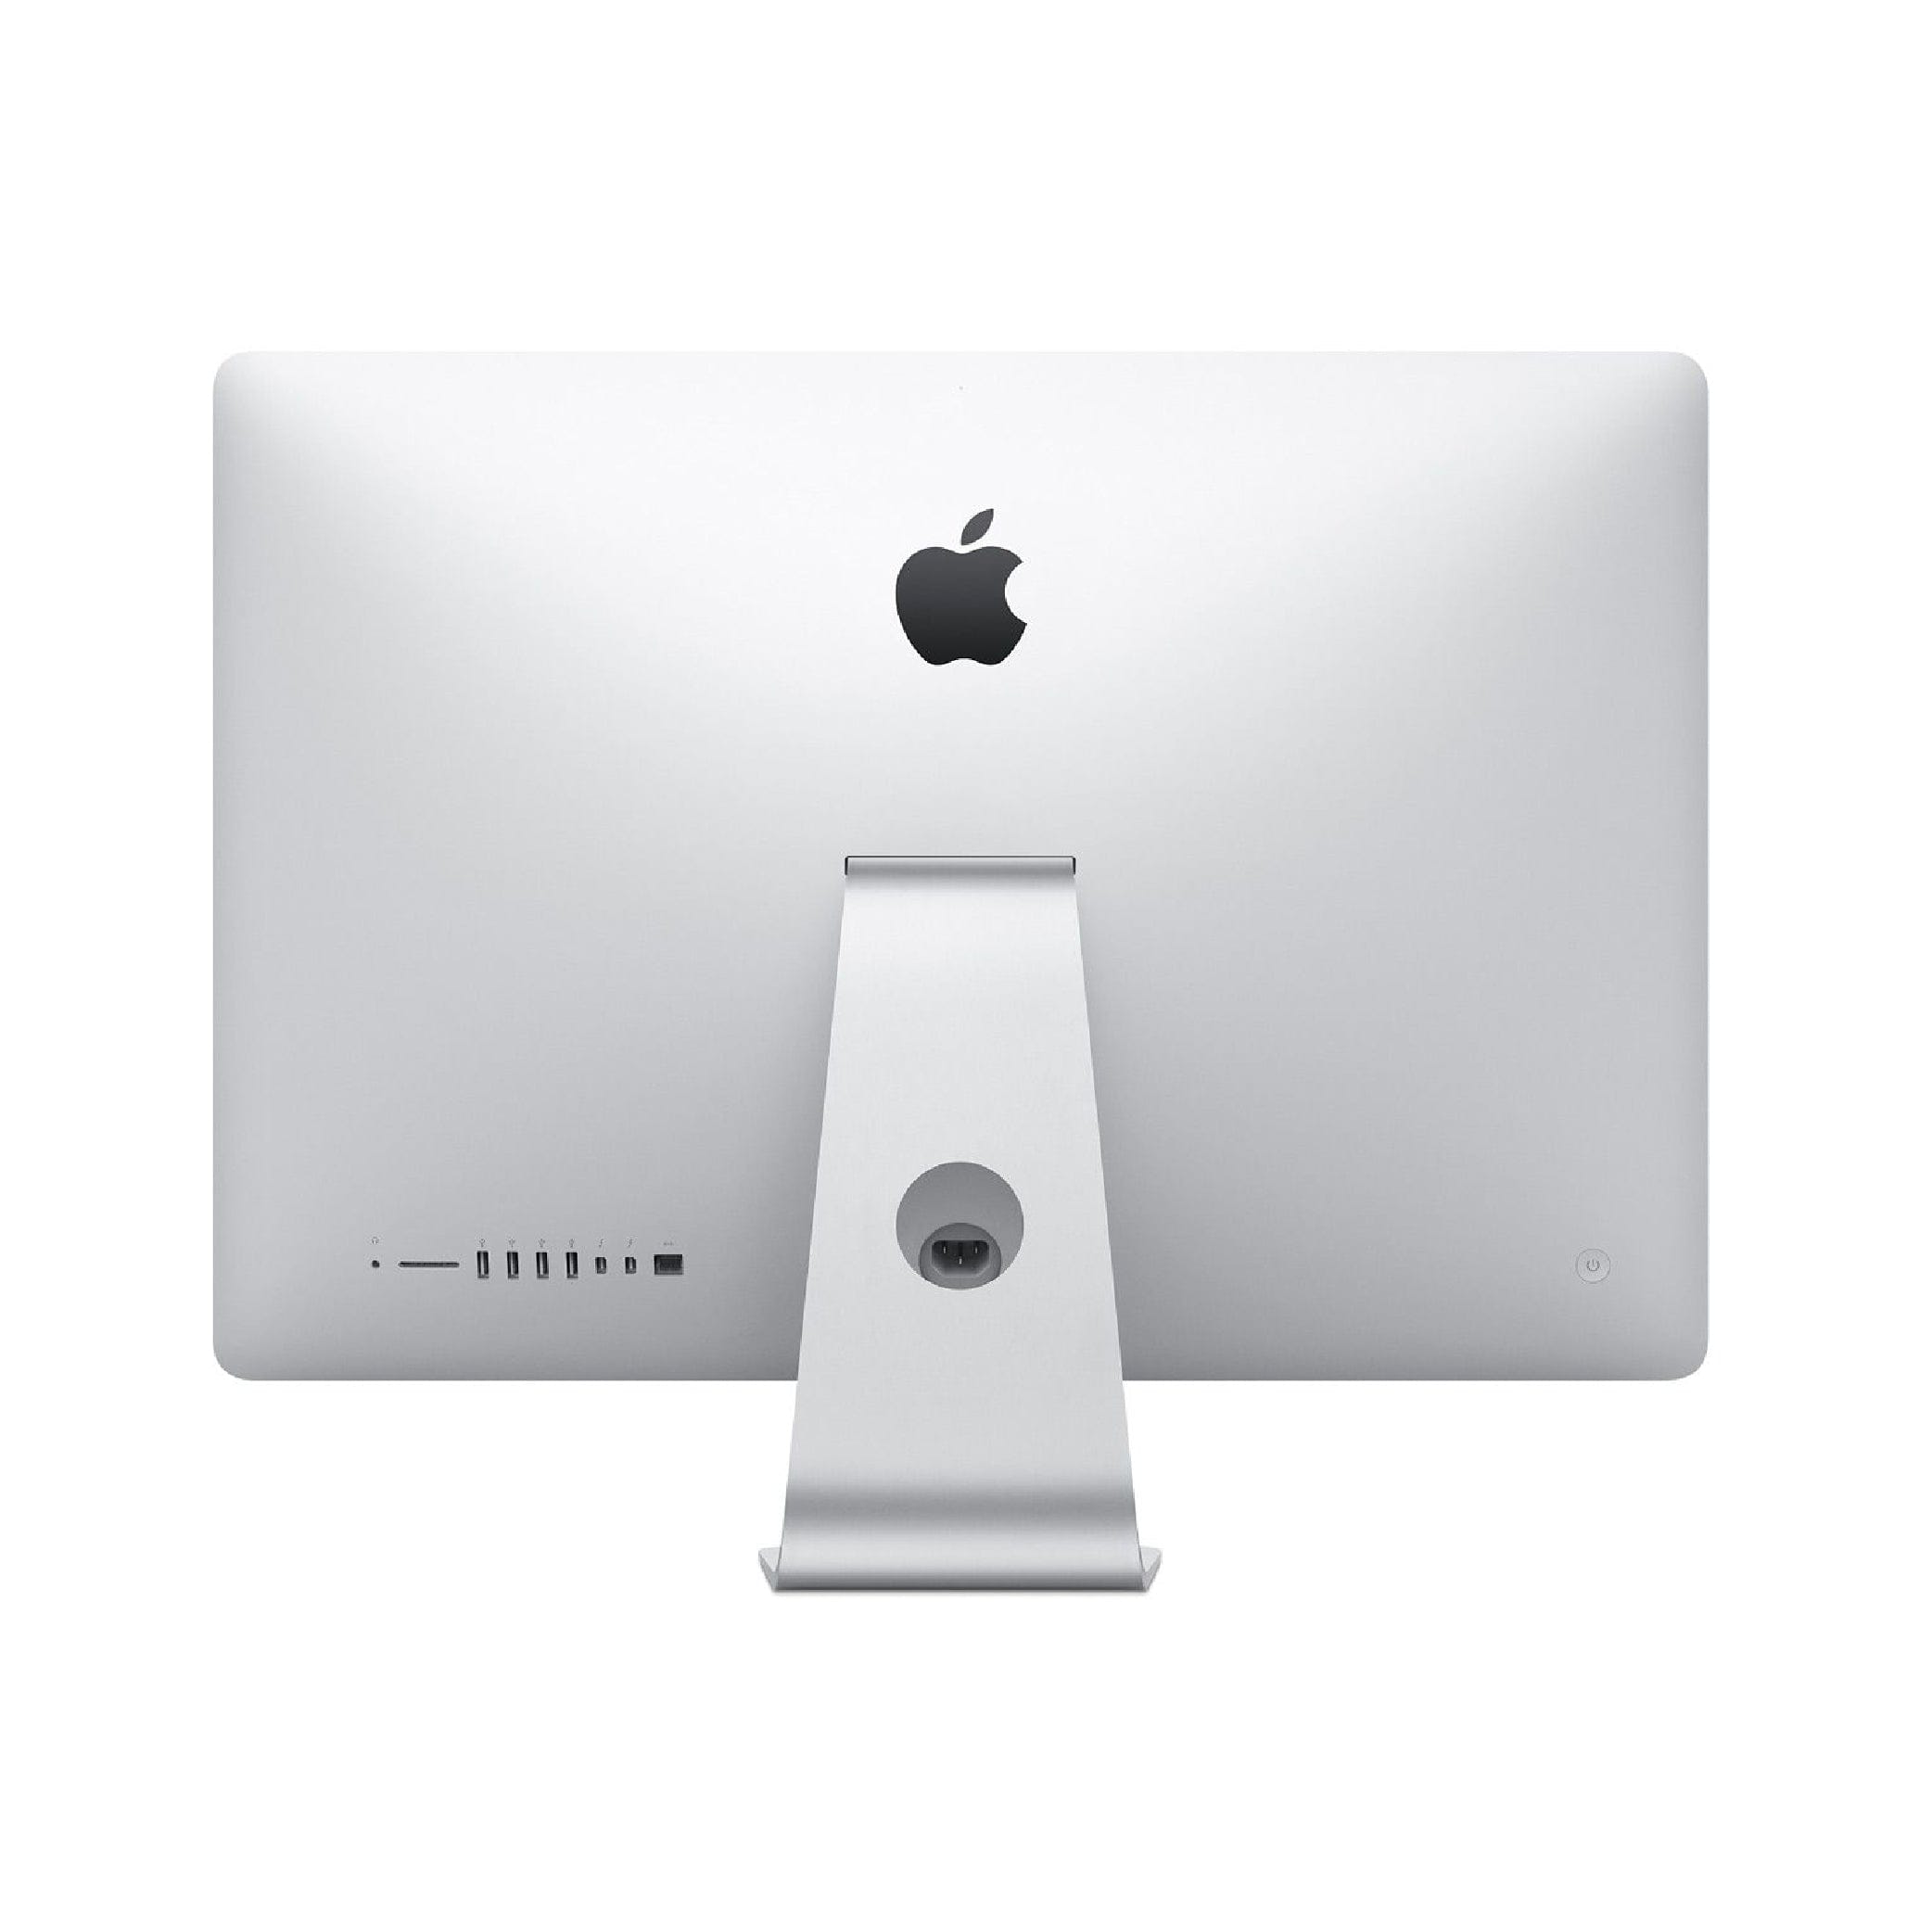 iMac 21.5-inch Retina (Mid-2017) Core i5 3.0GHz MNDY2LL/A - HDD 1 TB - 8GB